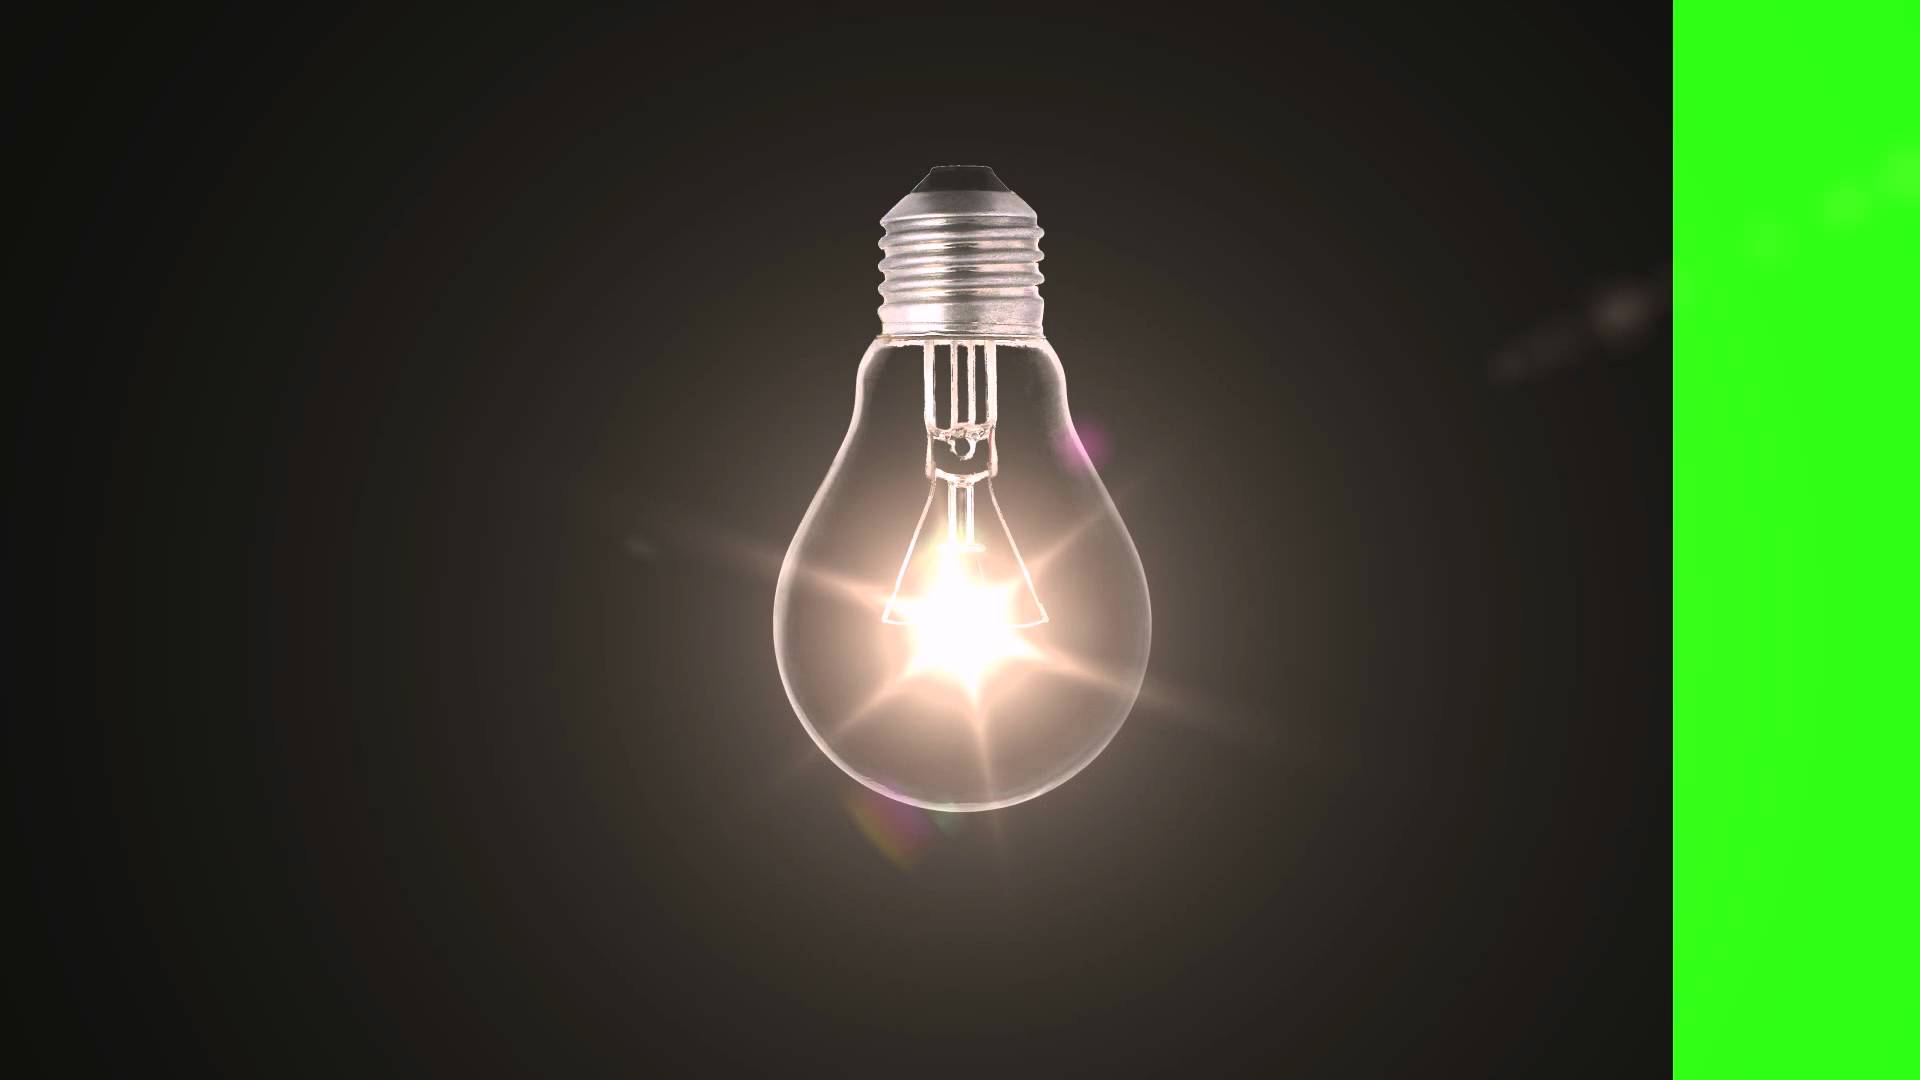 Light Bulb on - Green Screen Animation - YouTube